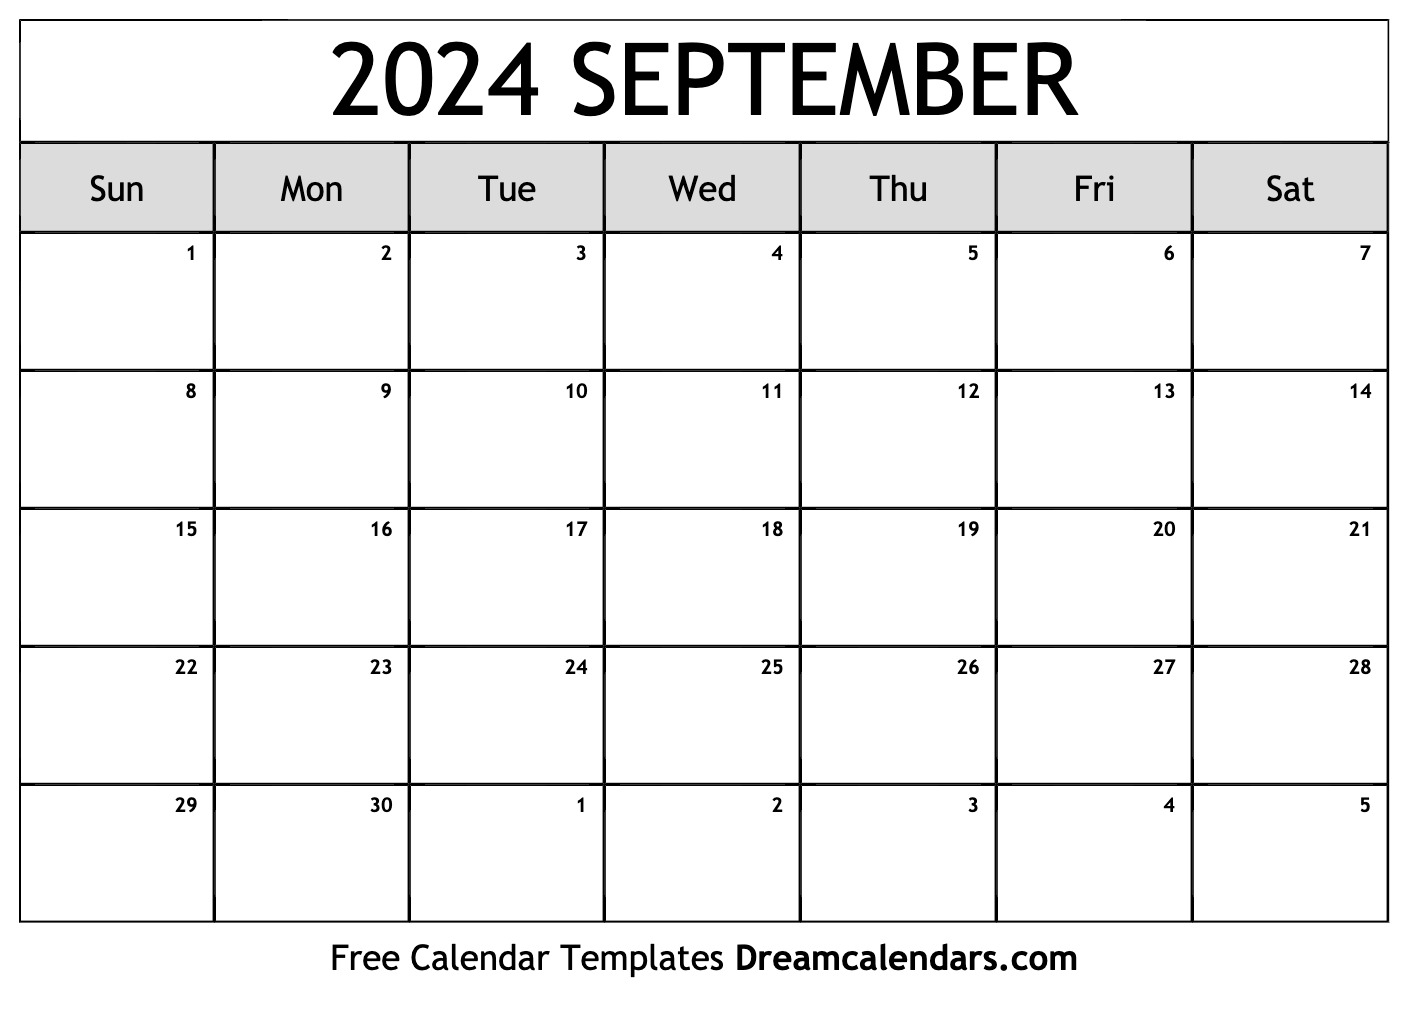 September 2024 Calendar | Free Blank Printable With Holidays for 2024 September Calendar Printable